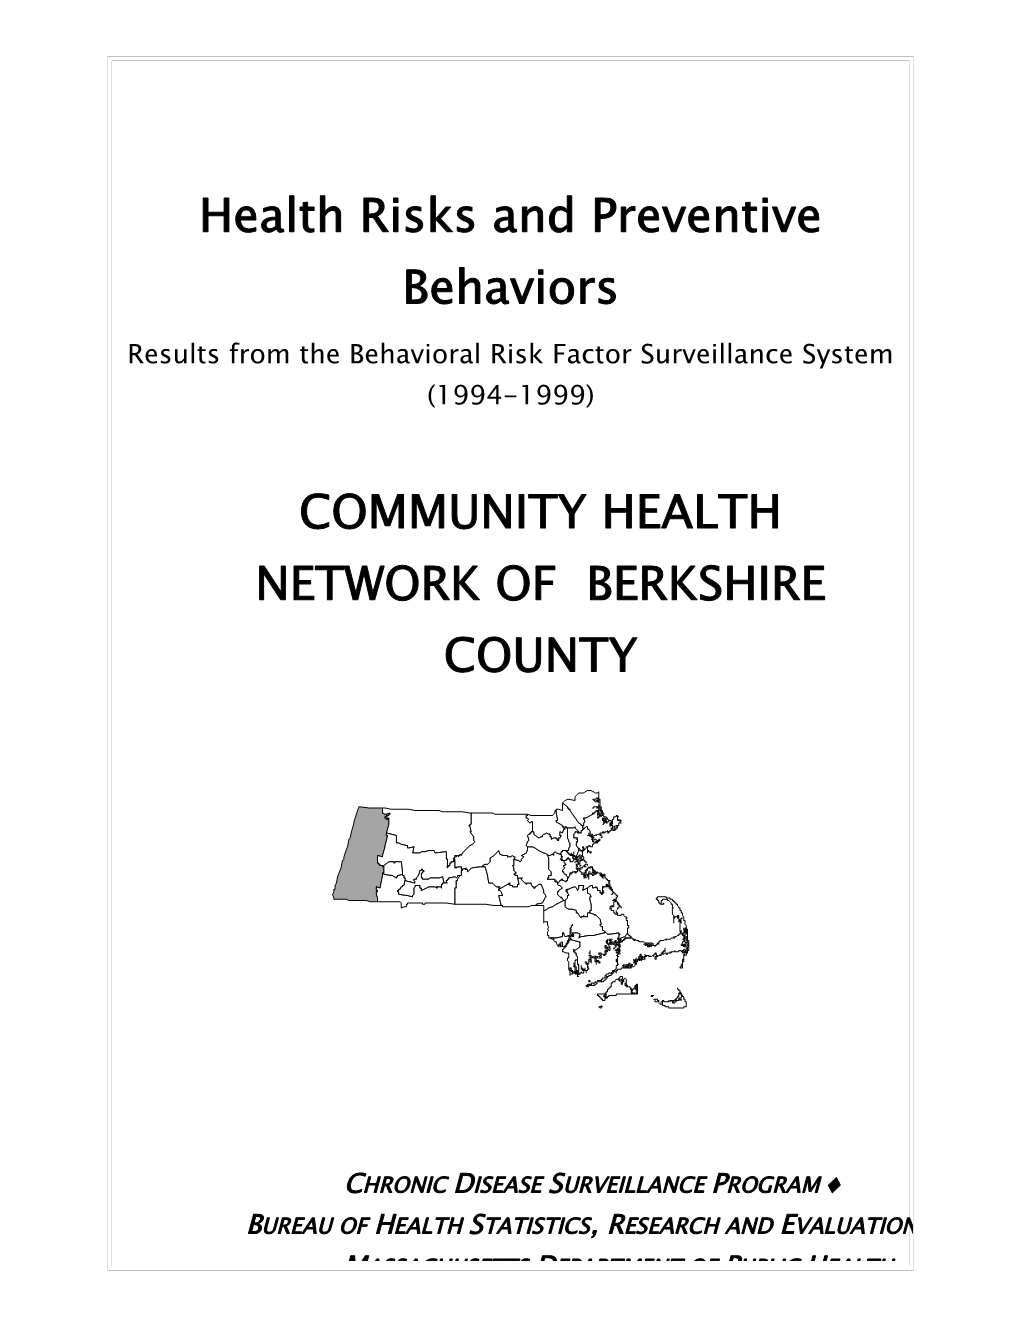 CHNA 1 Community Health Network of Berkshire County